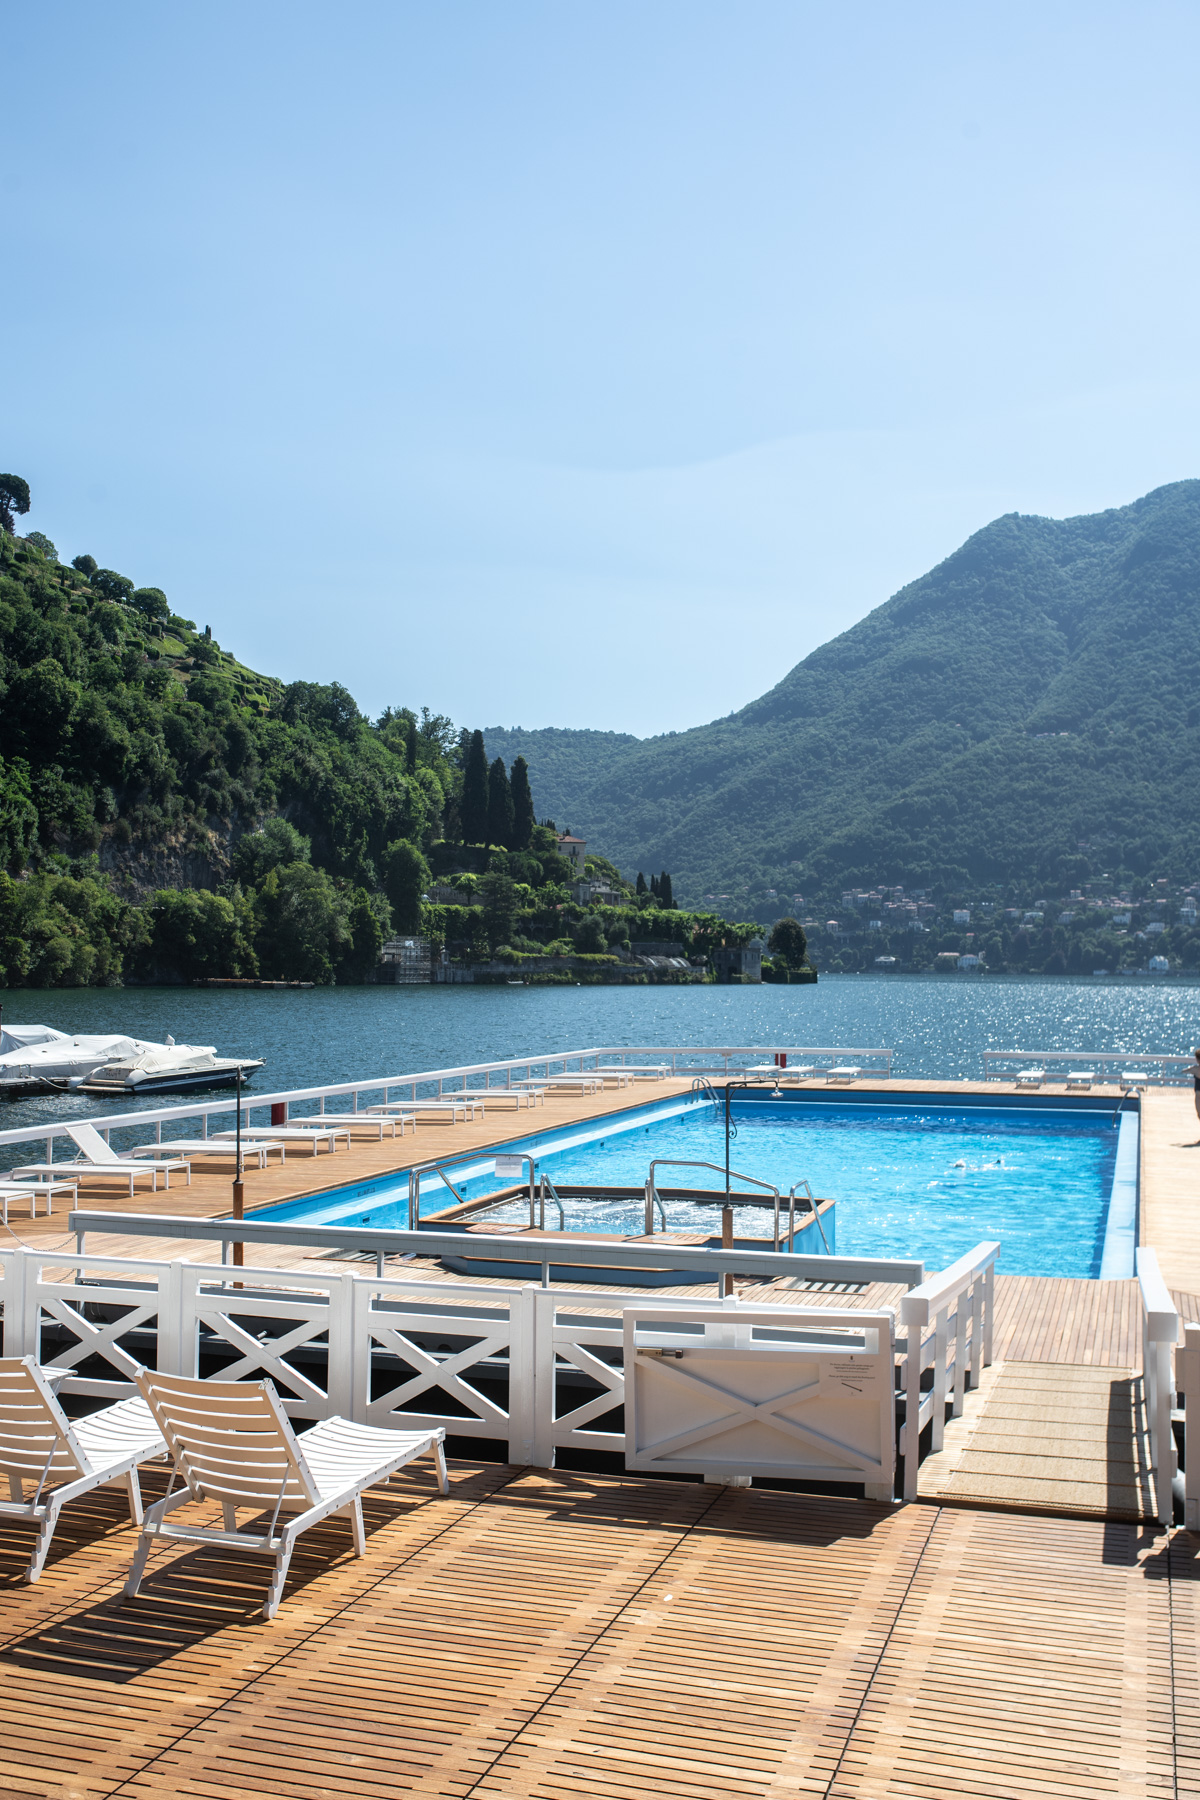 Stacie Flinner x Villa dEste Maupin Travel Lake Como-15.jpg